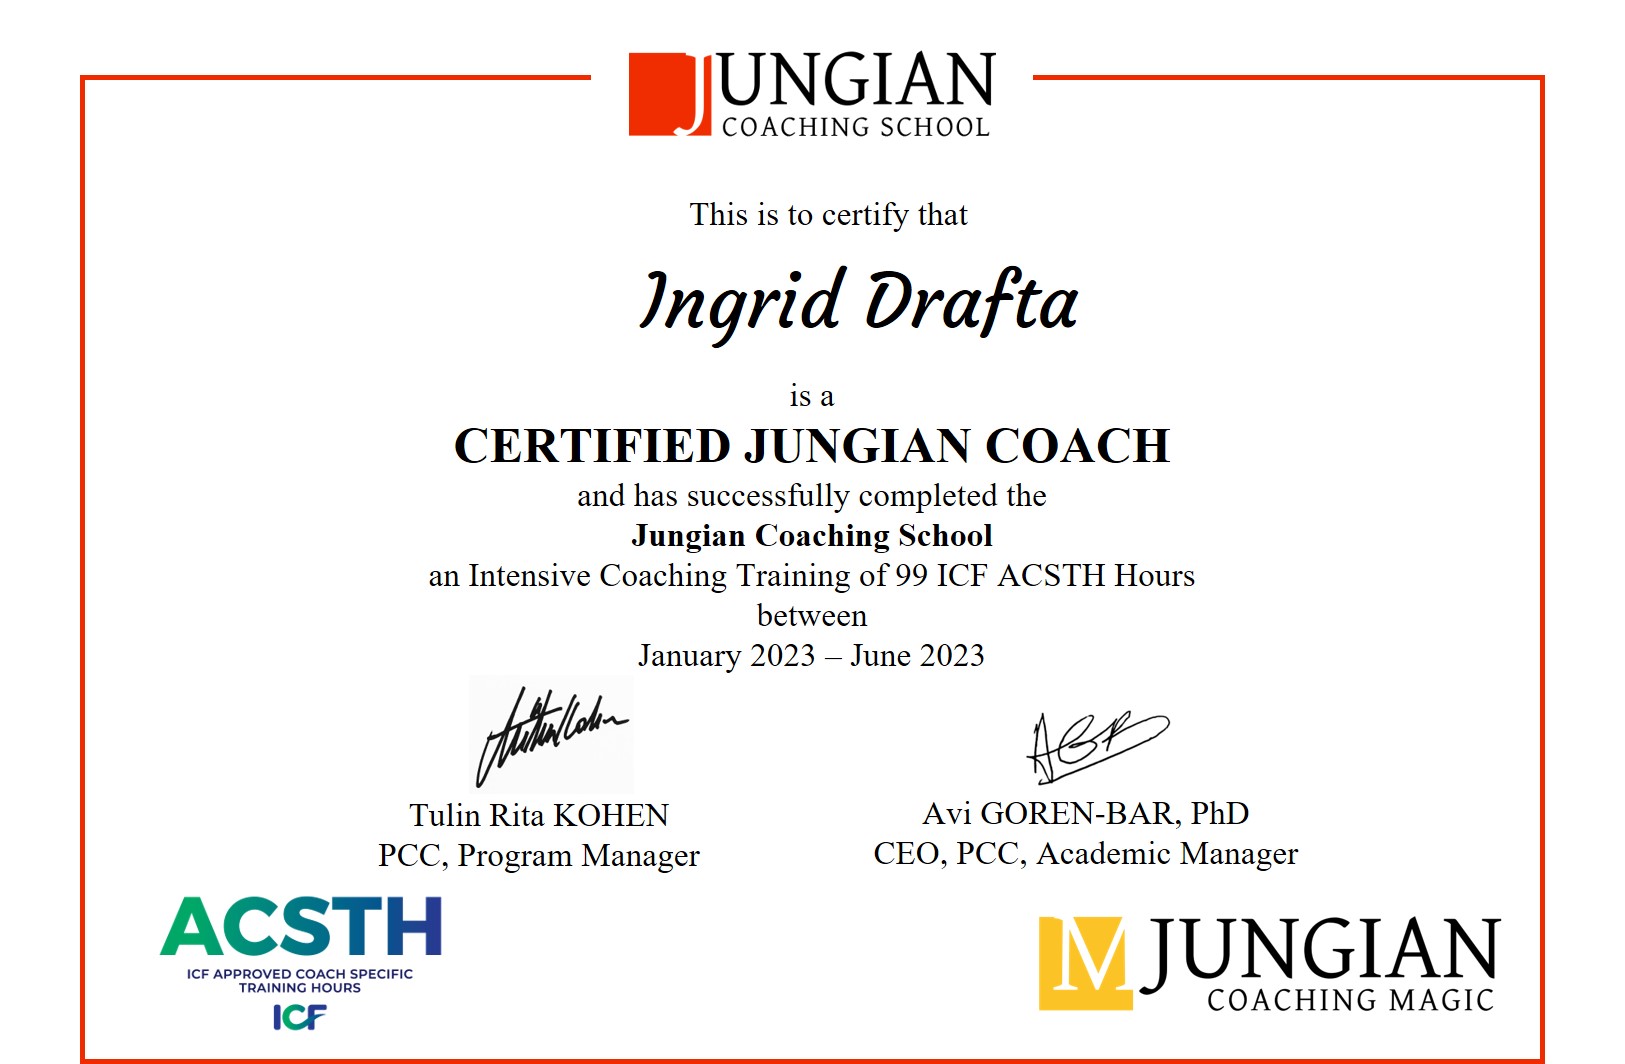 Certificate Jungian Coach Ingrid Drafta